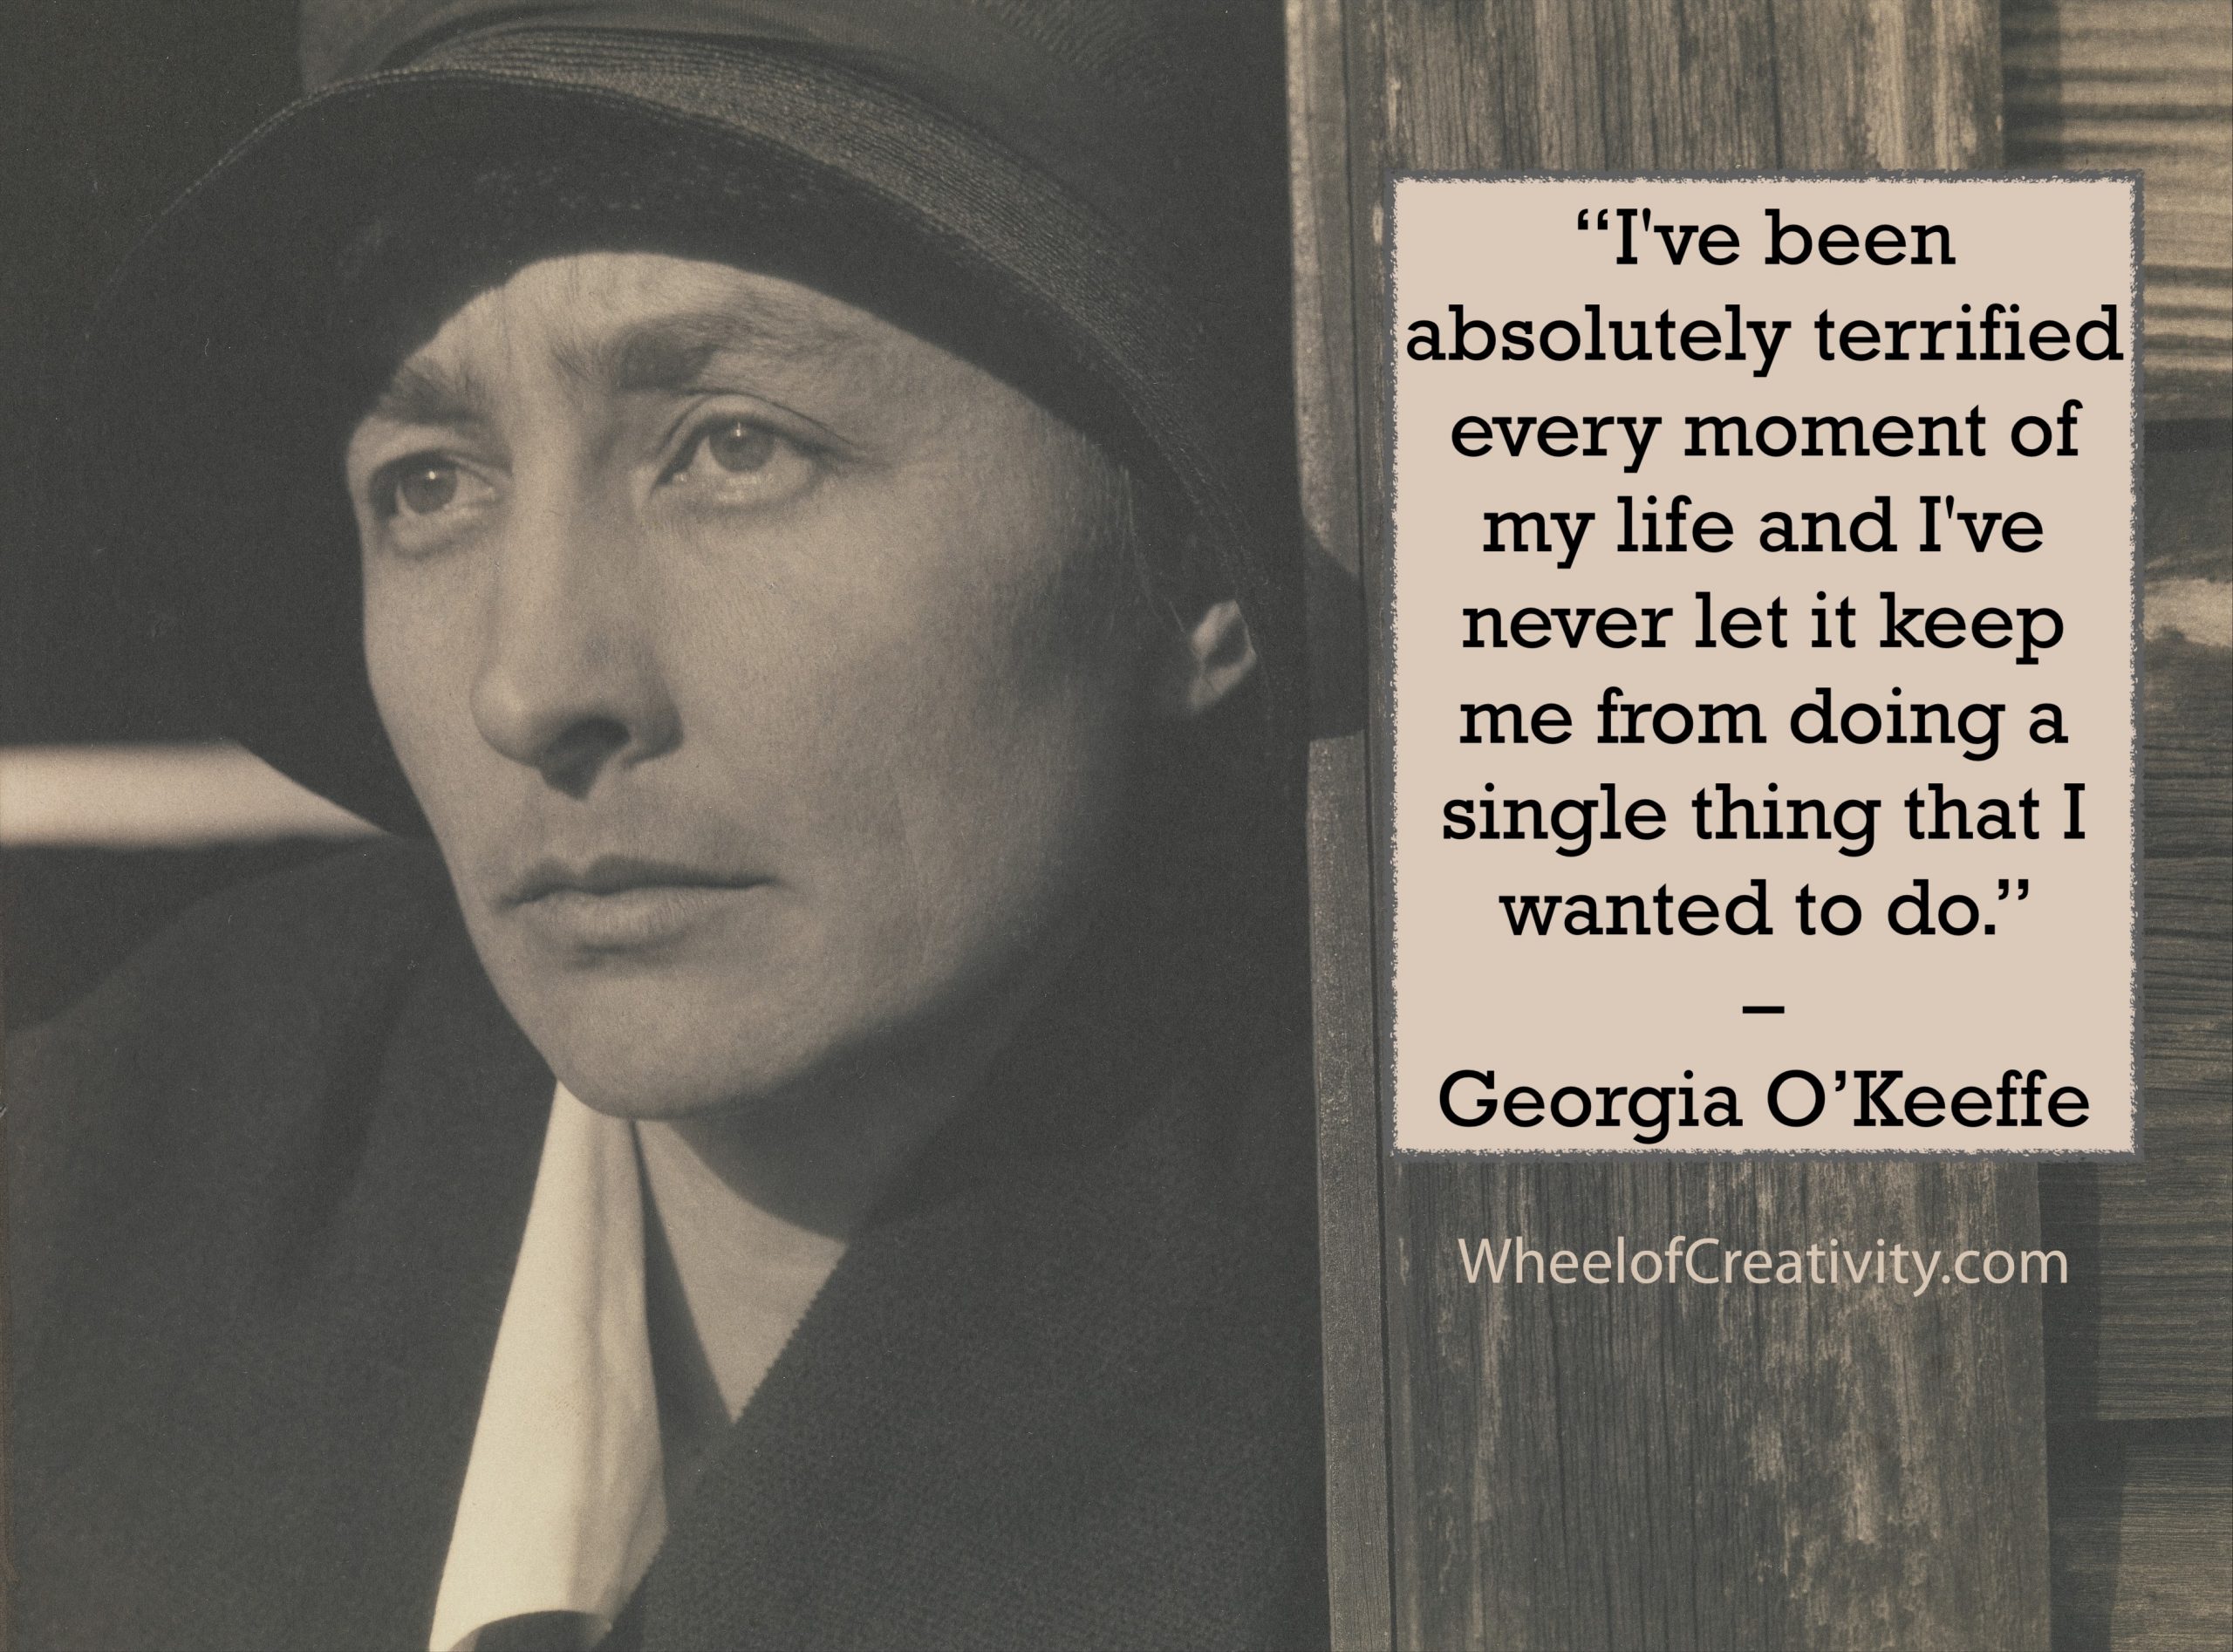 Georgia O'Keeffe on fear